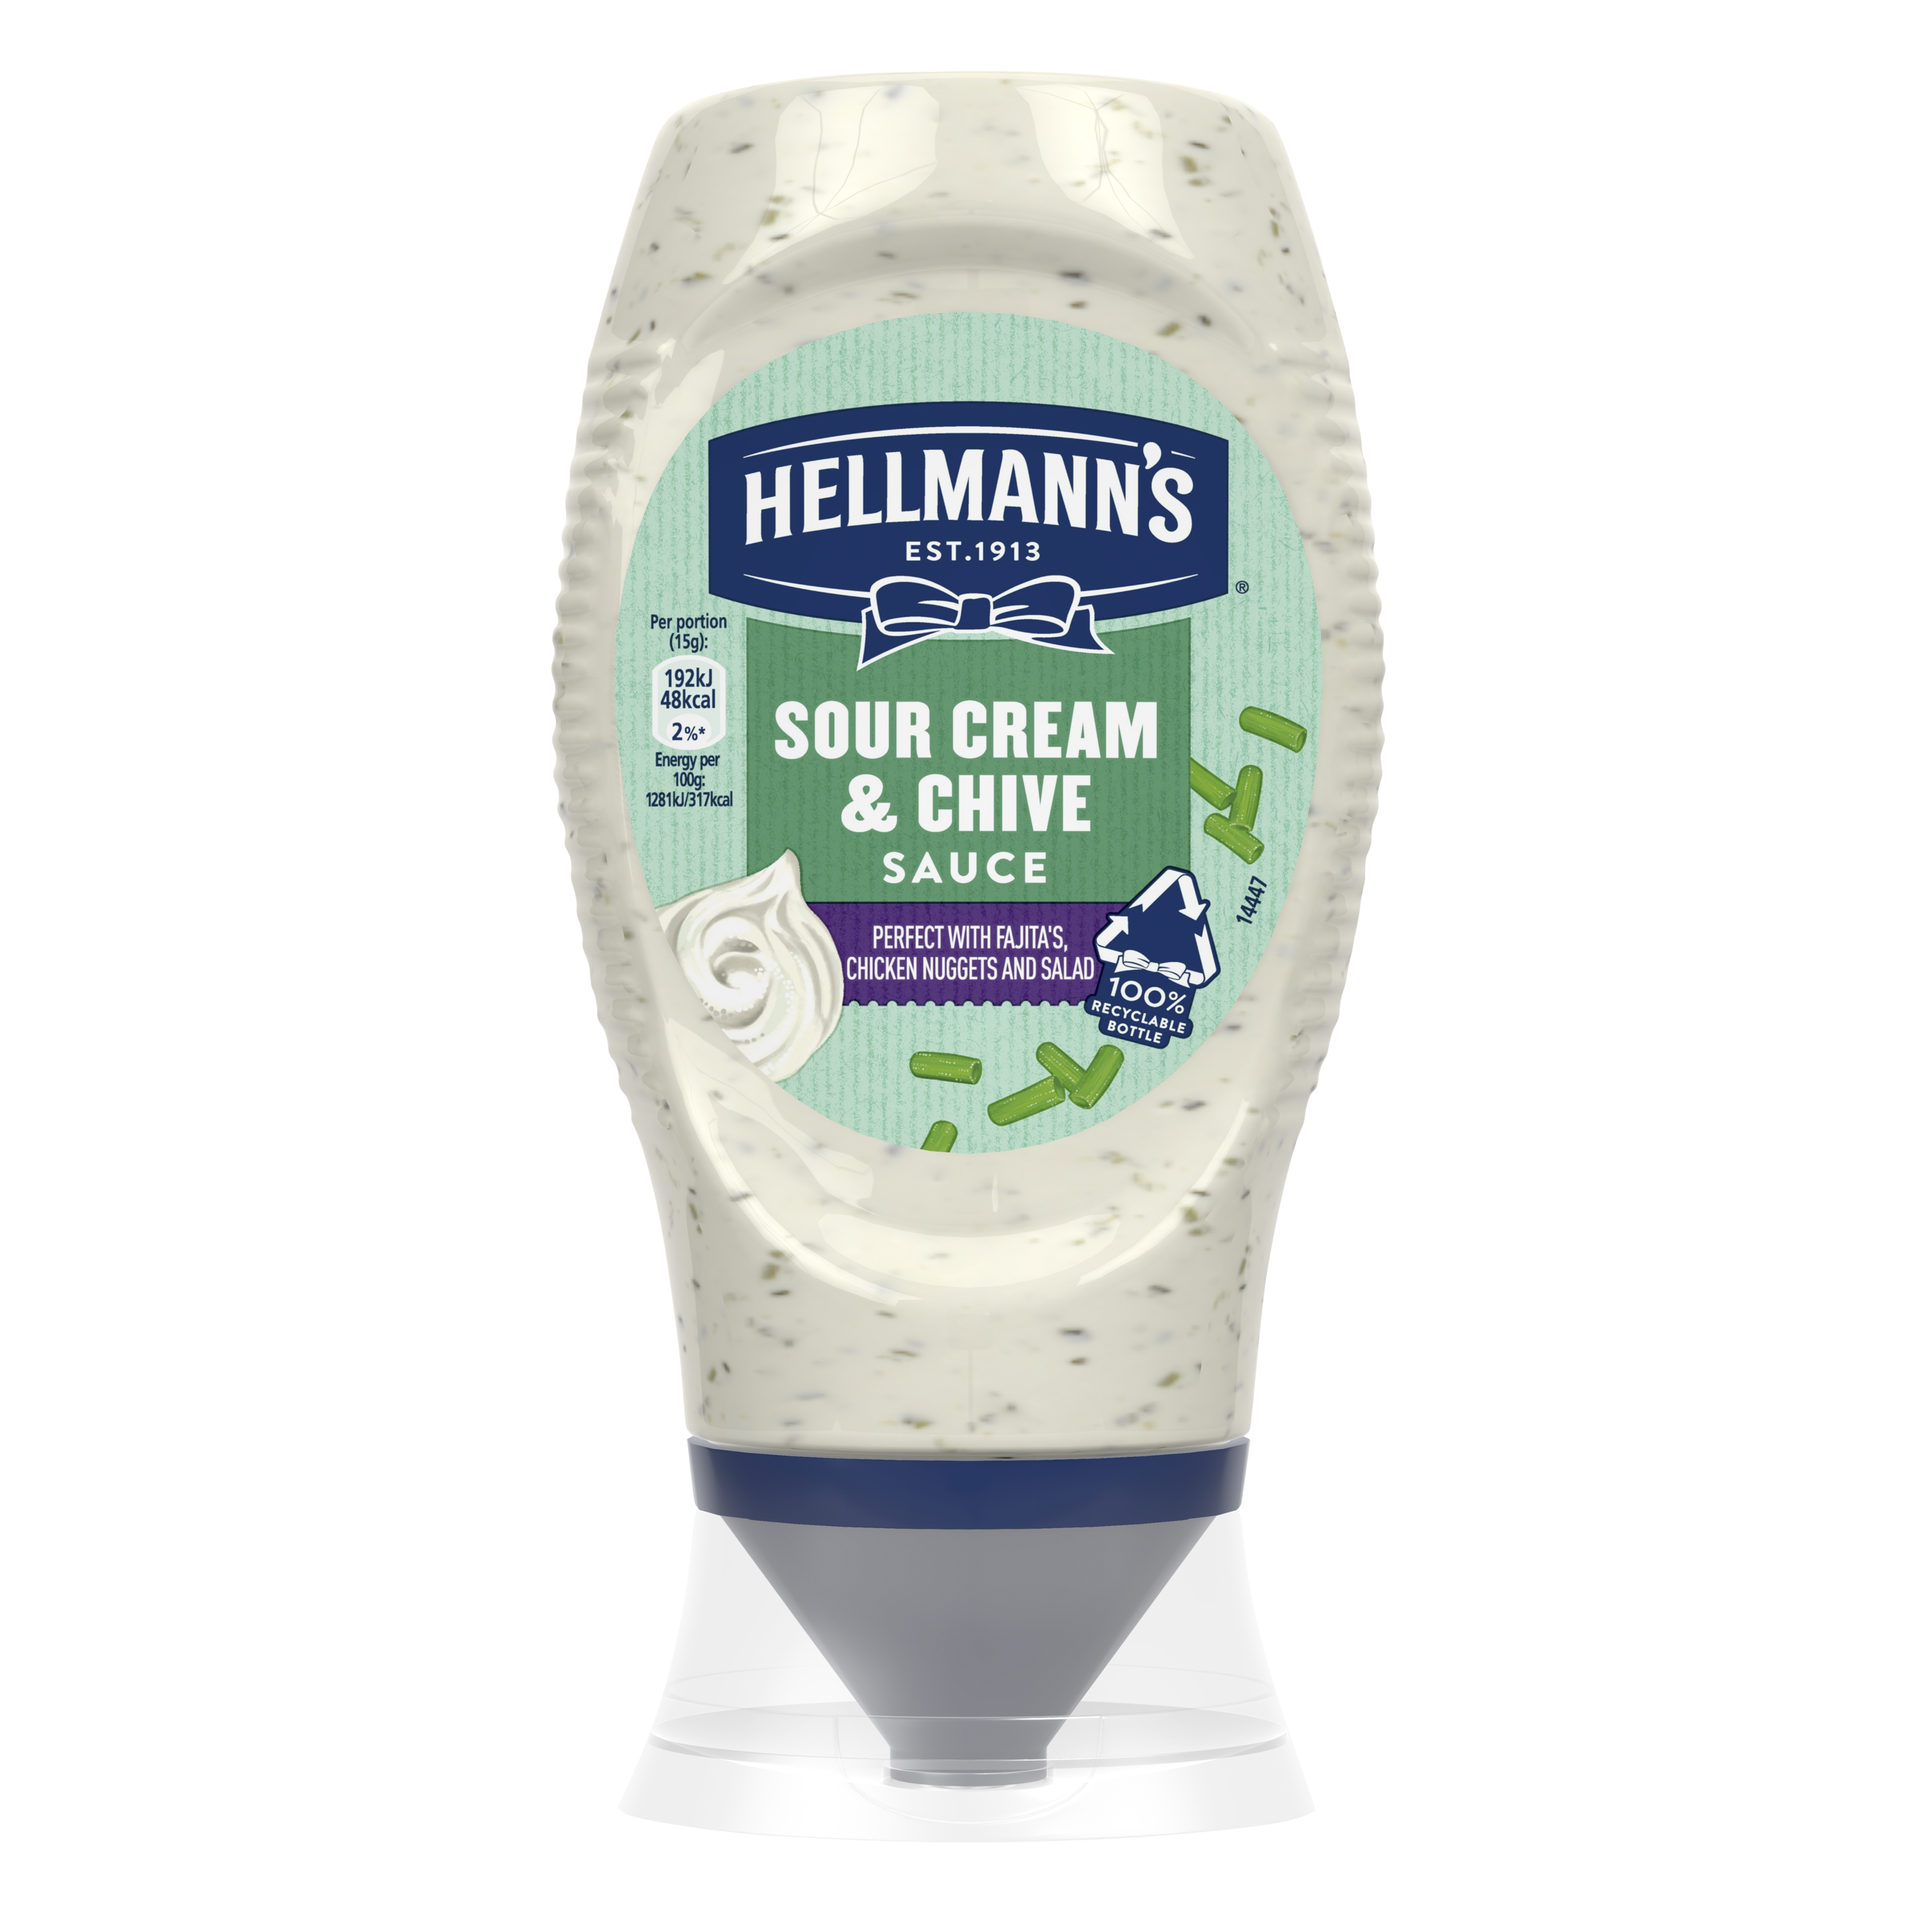 Hellmann's Sour Cream & Chive Sauce